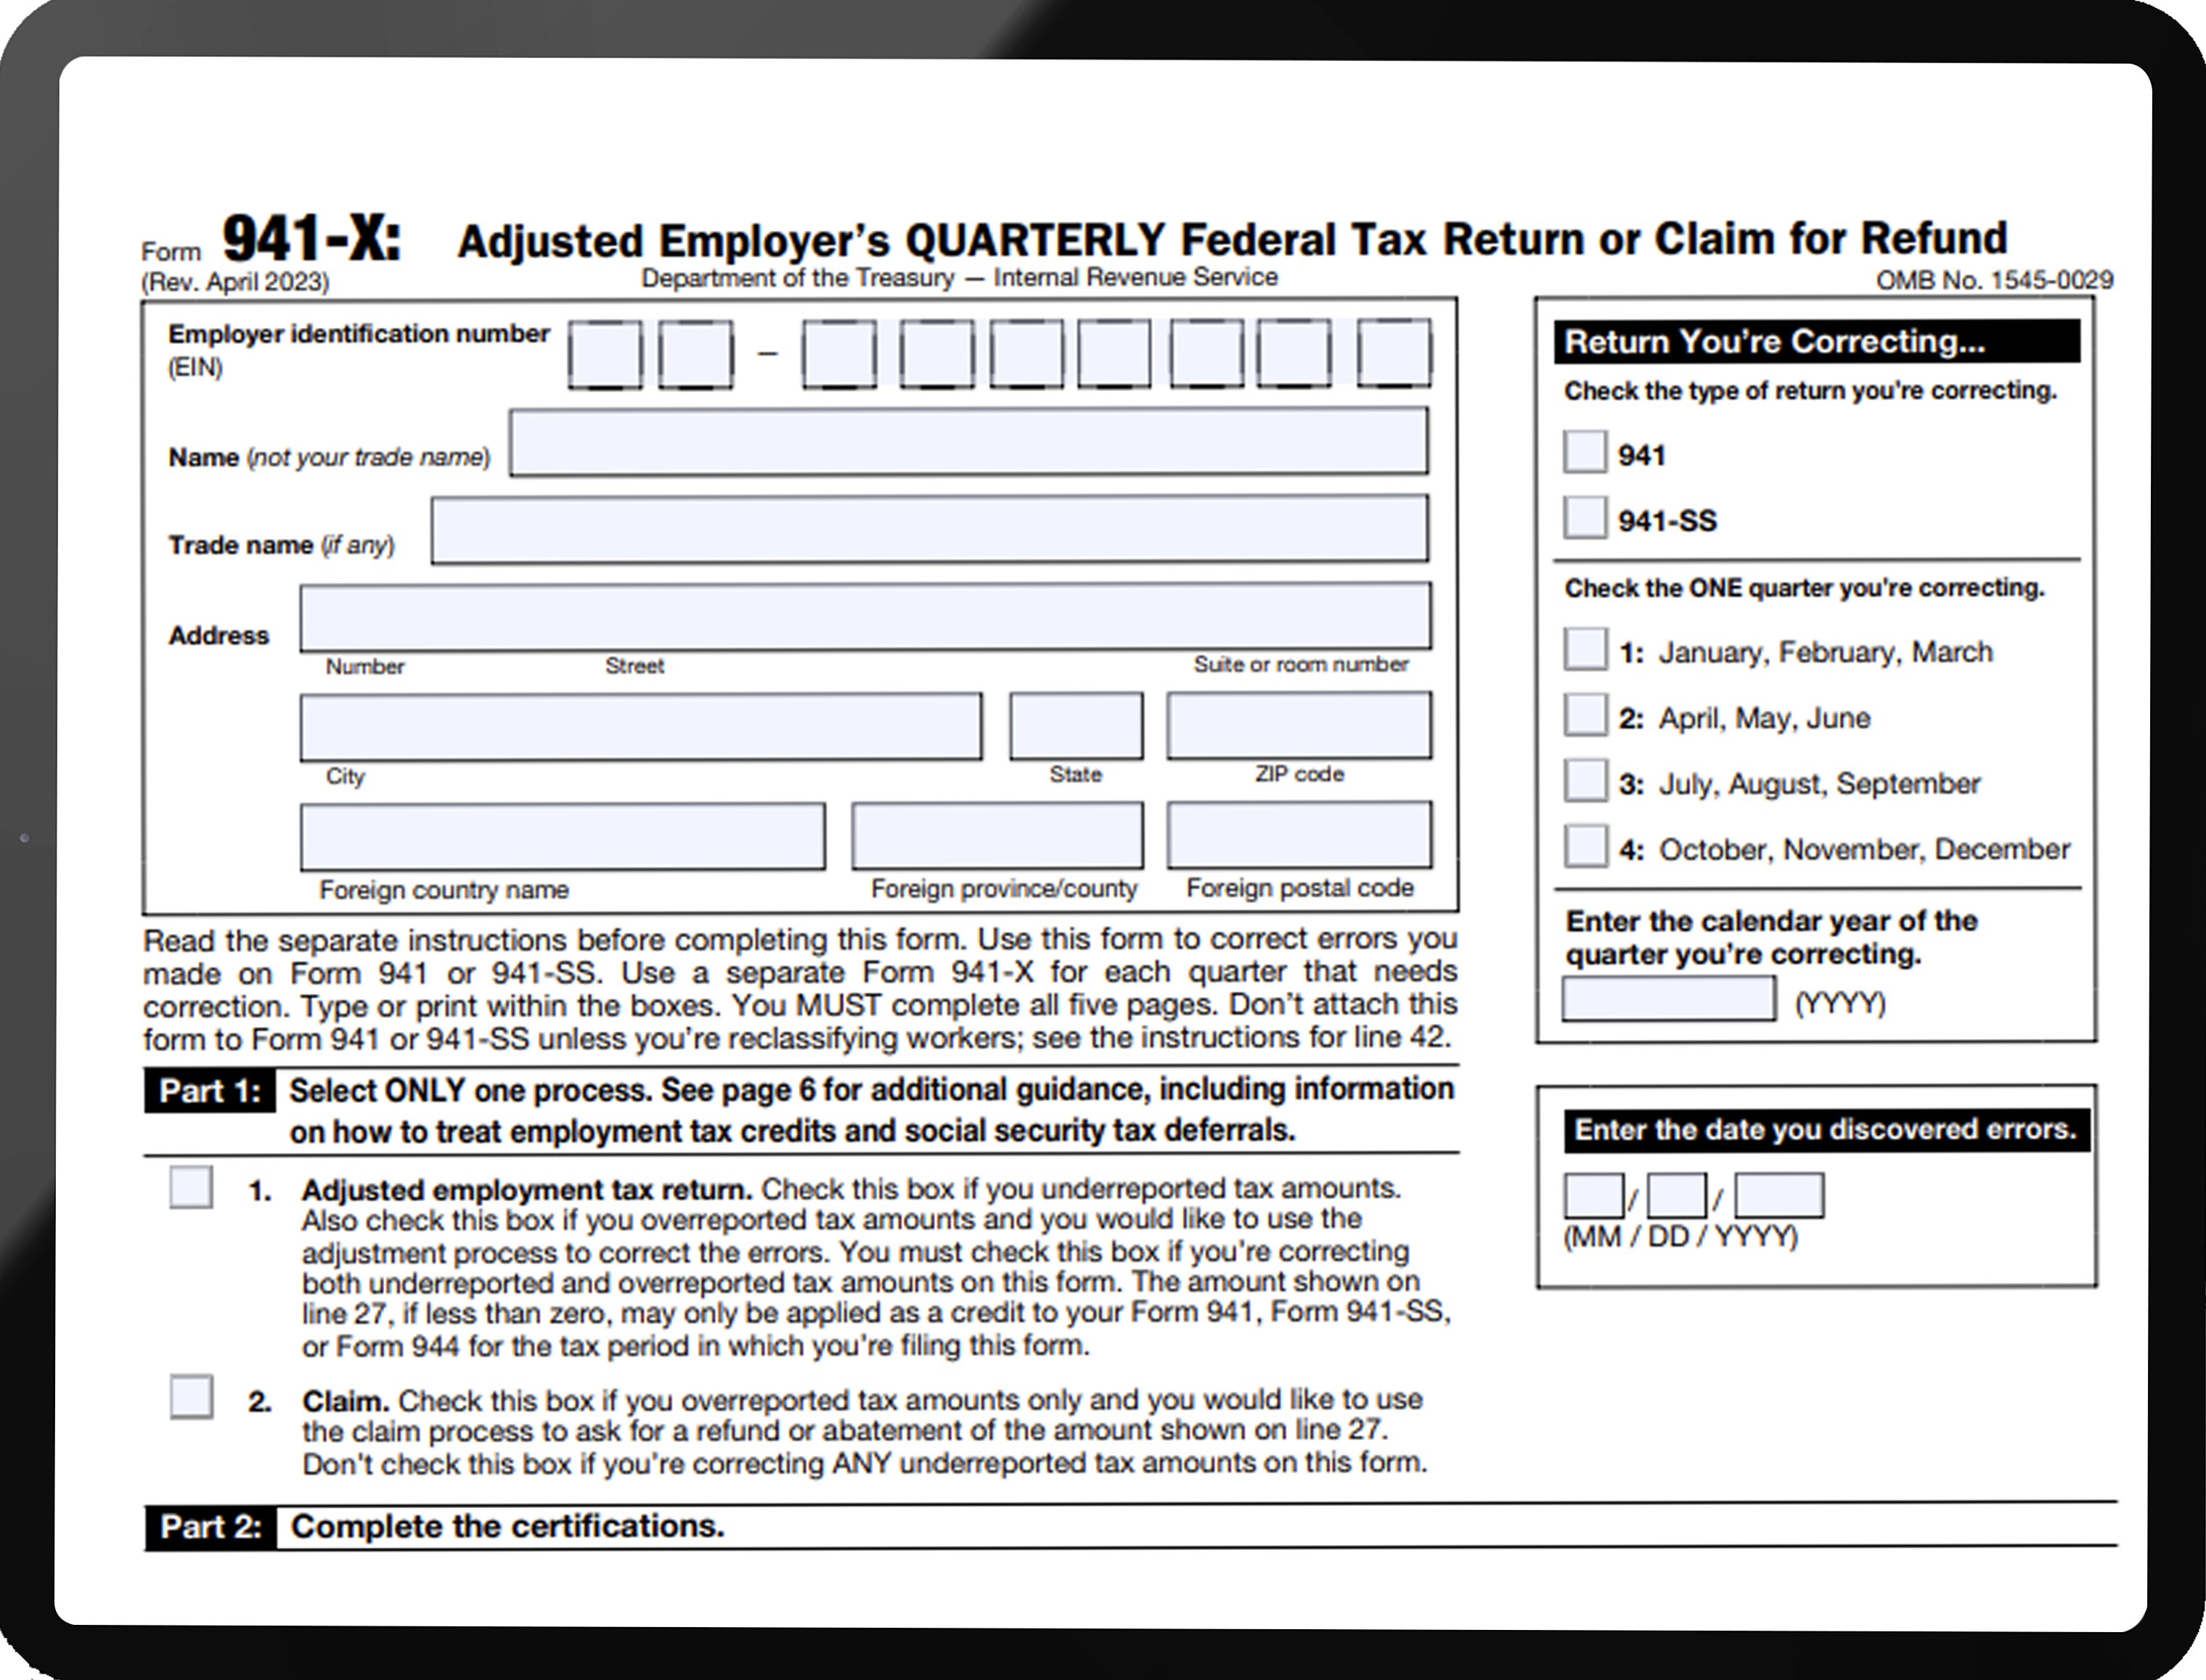 E-File Form 941 Online for 2023